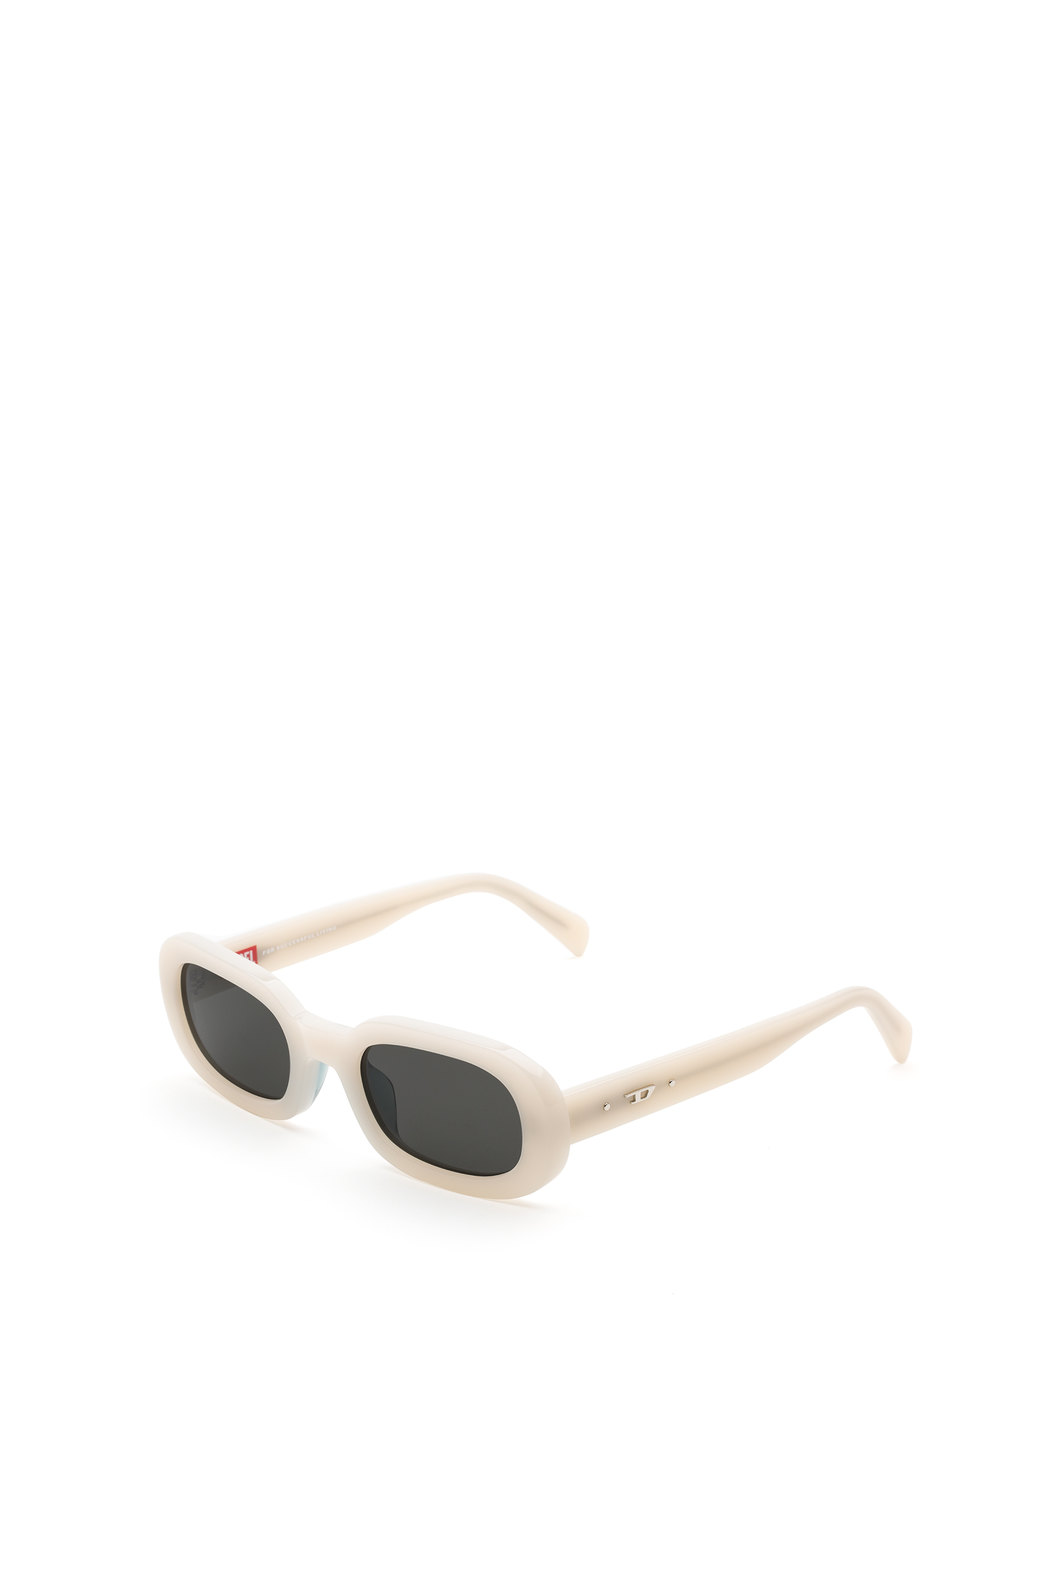 Iconic oval sunglasses